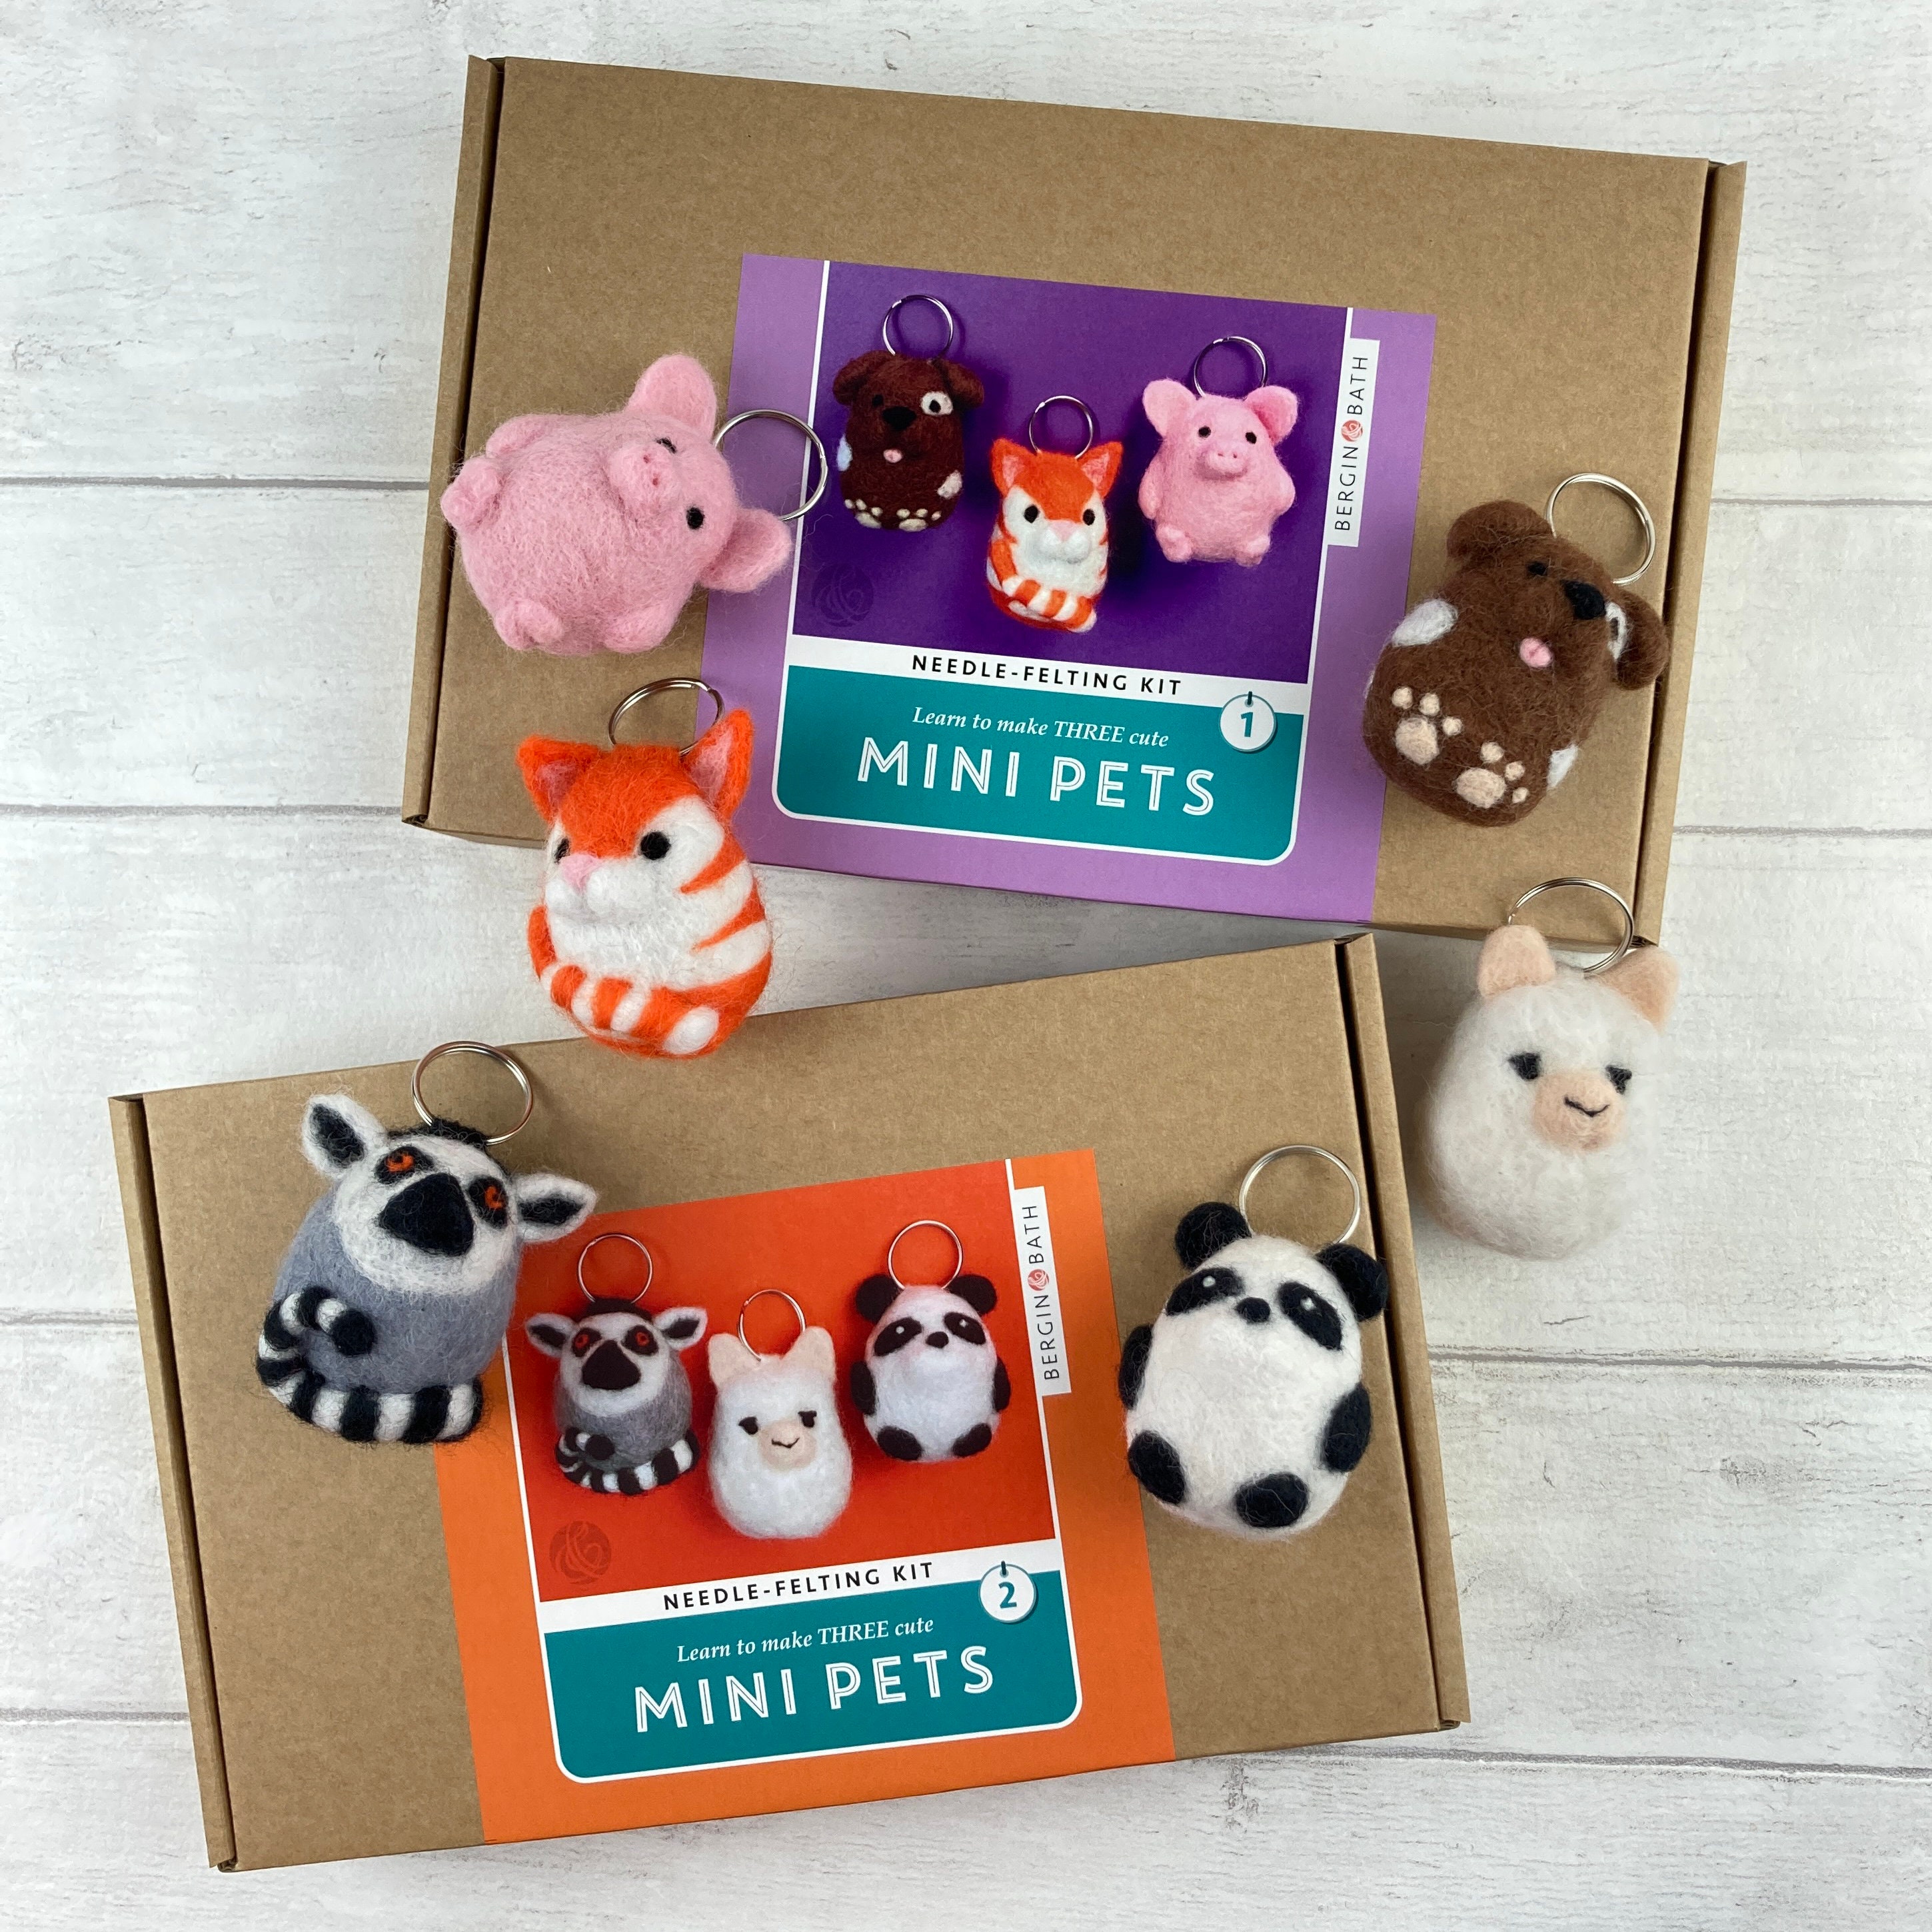 Needle Felting Kit - Mini Pets 2 - Make THREE felt animals with